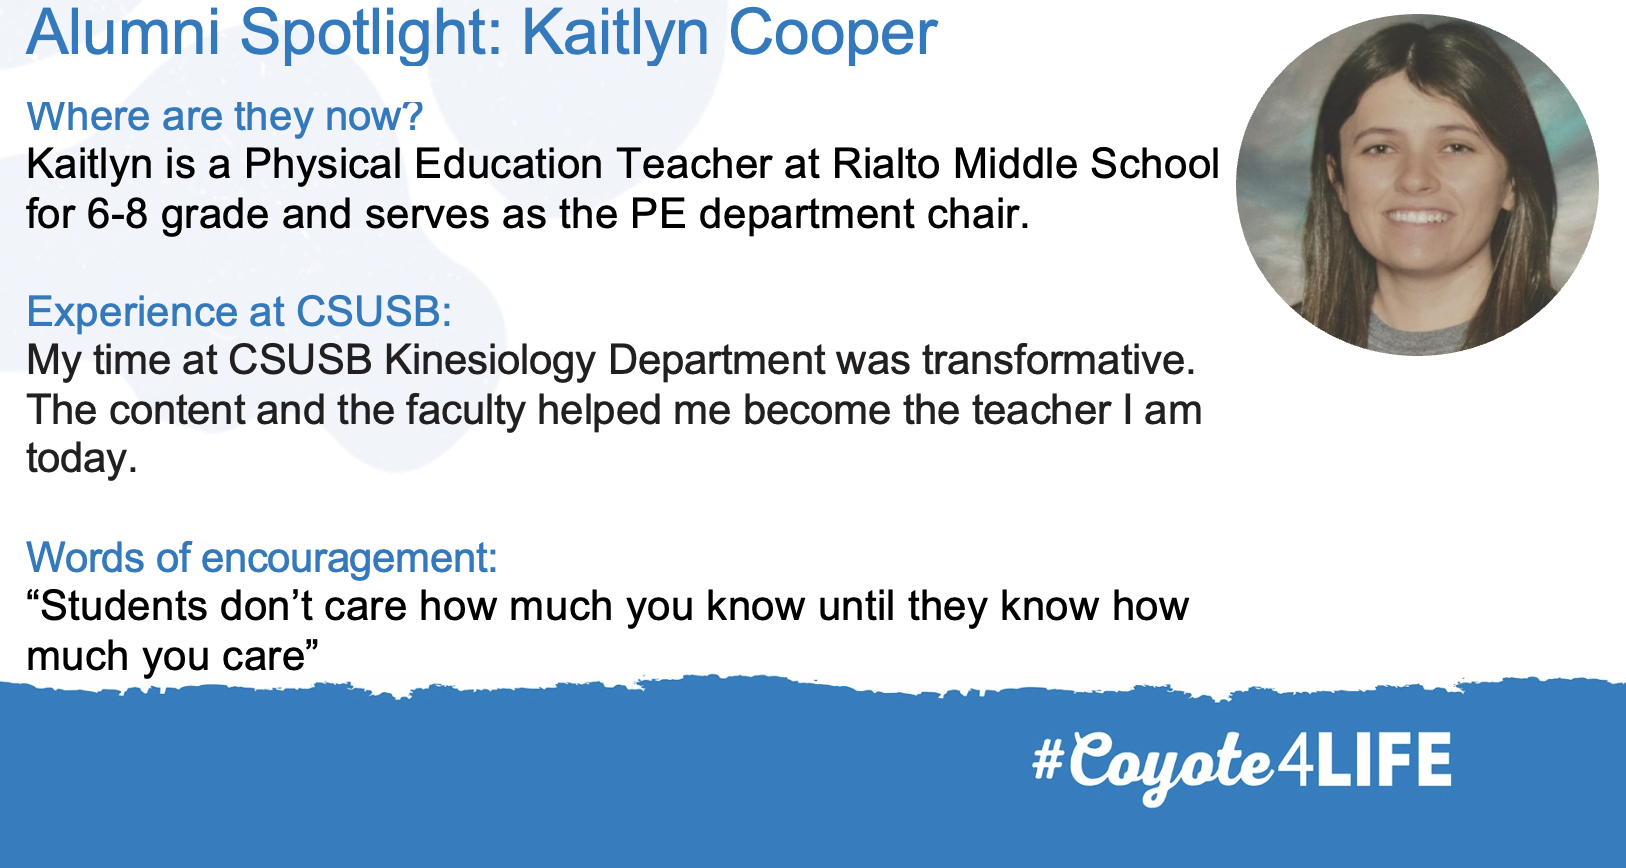 Alumni Spotlight: Kaitlyn Cooper